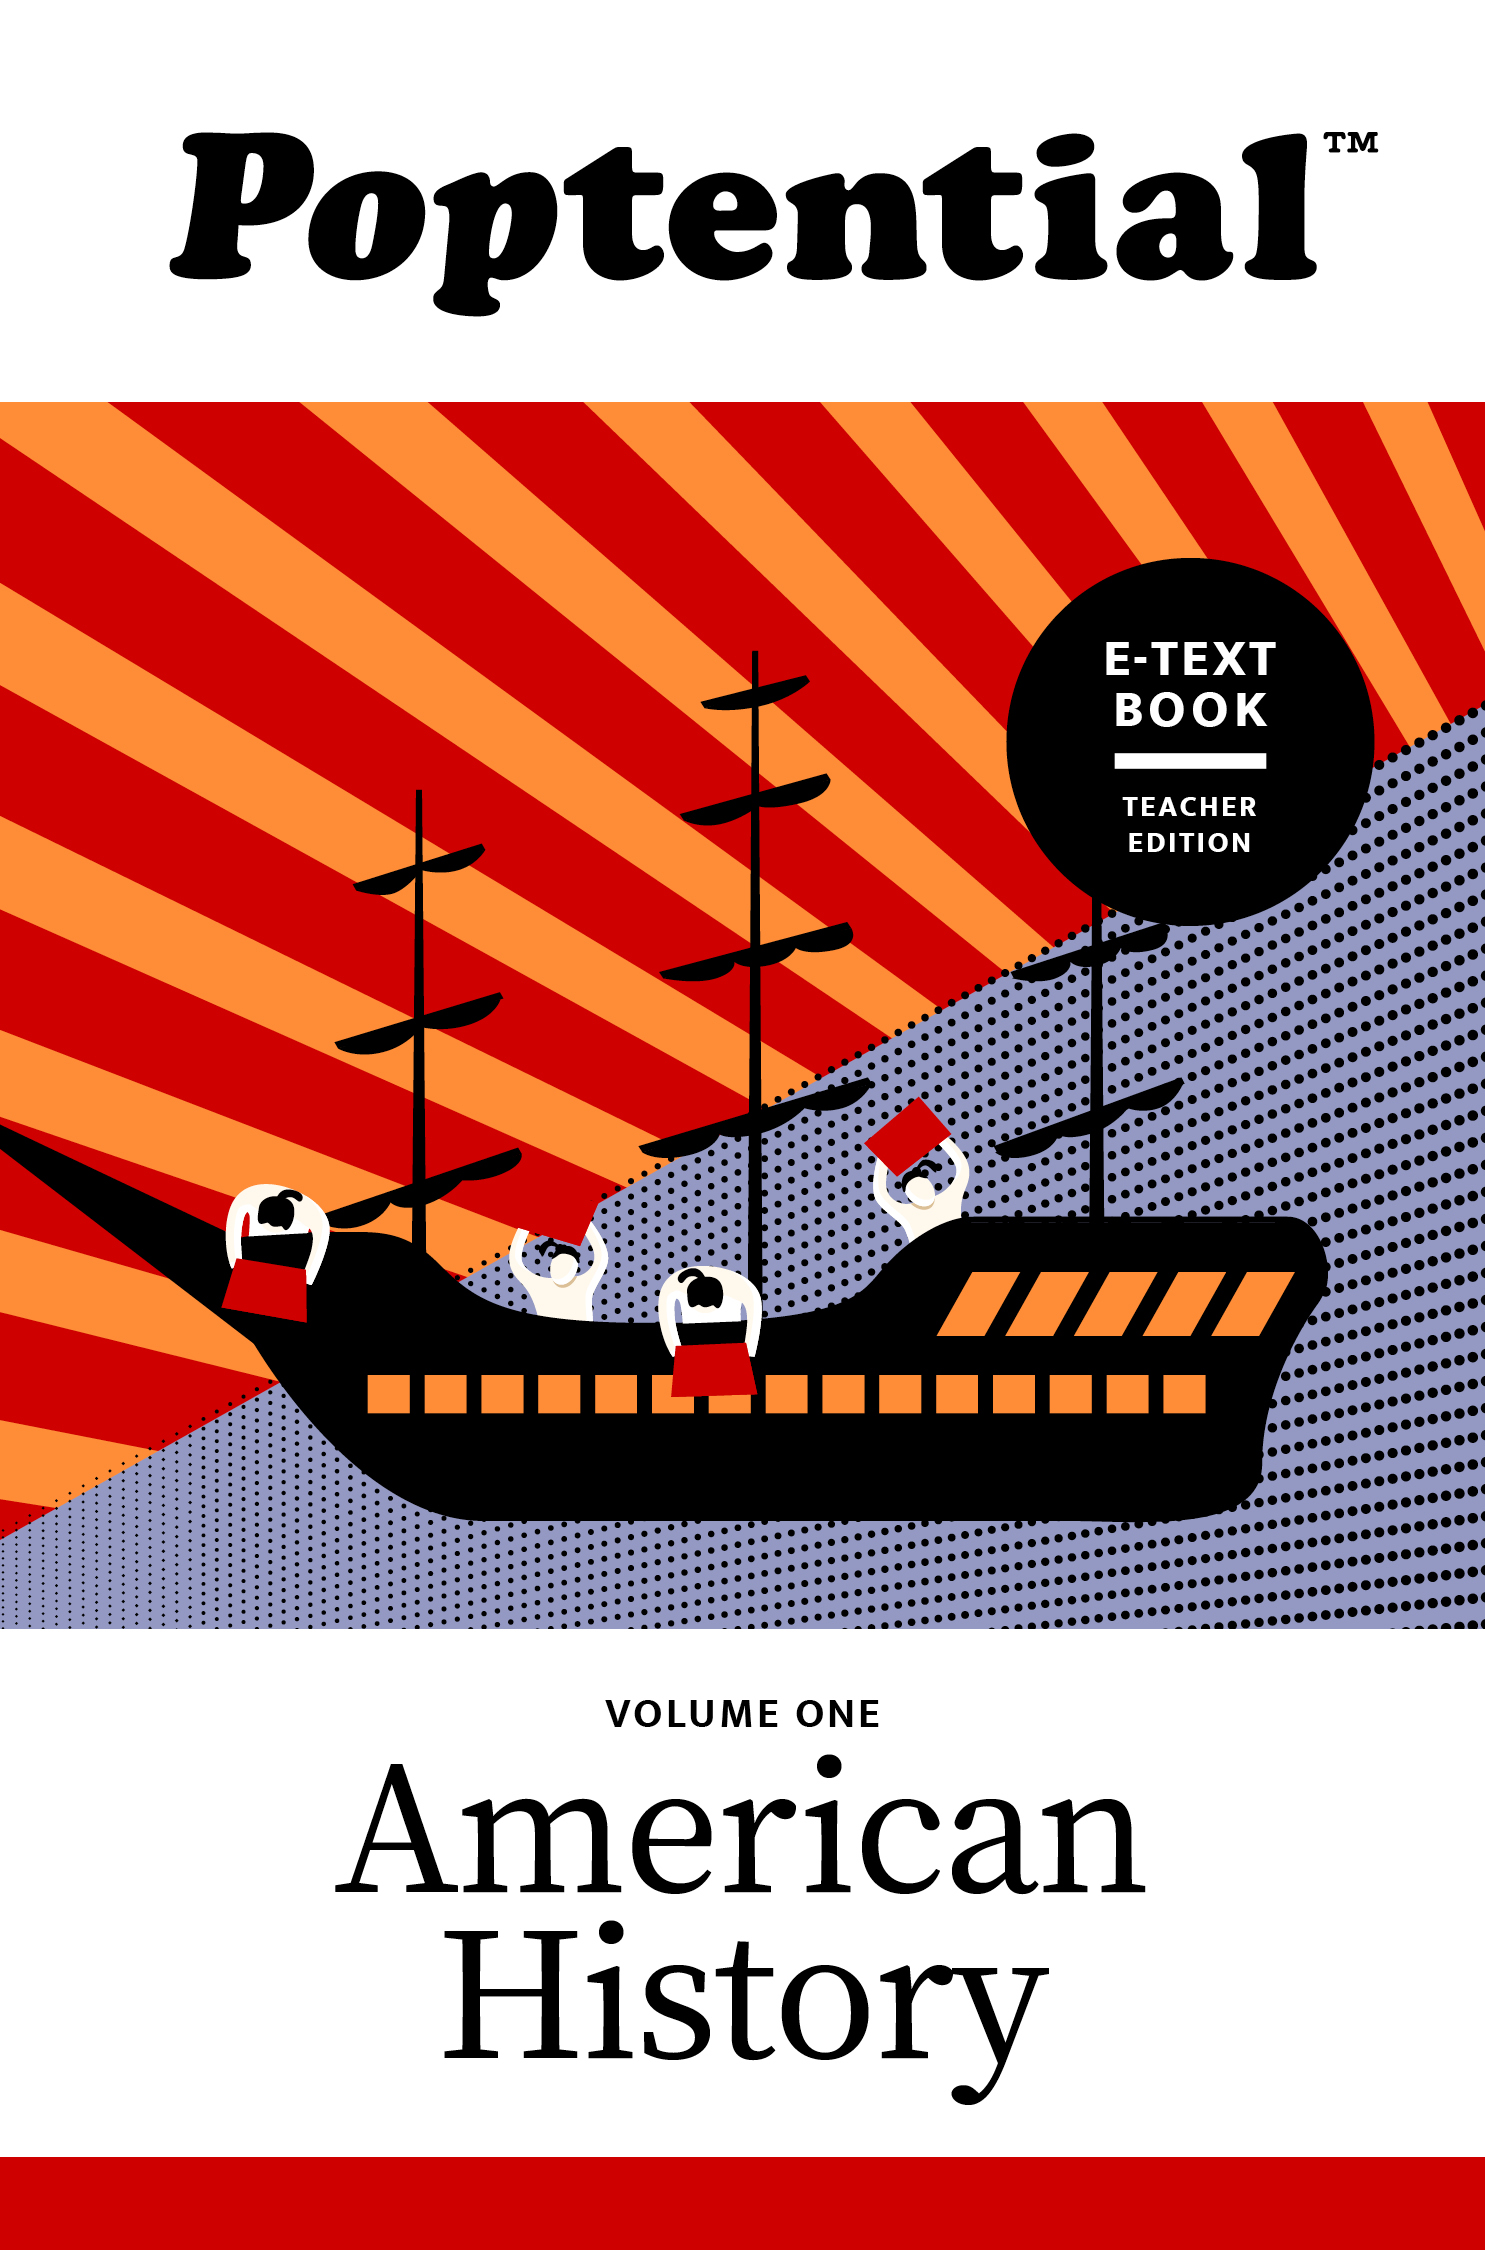 American History Volume 1 – E-Textbook (Teacher Edition)